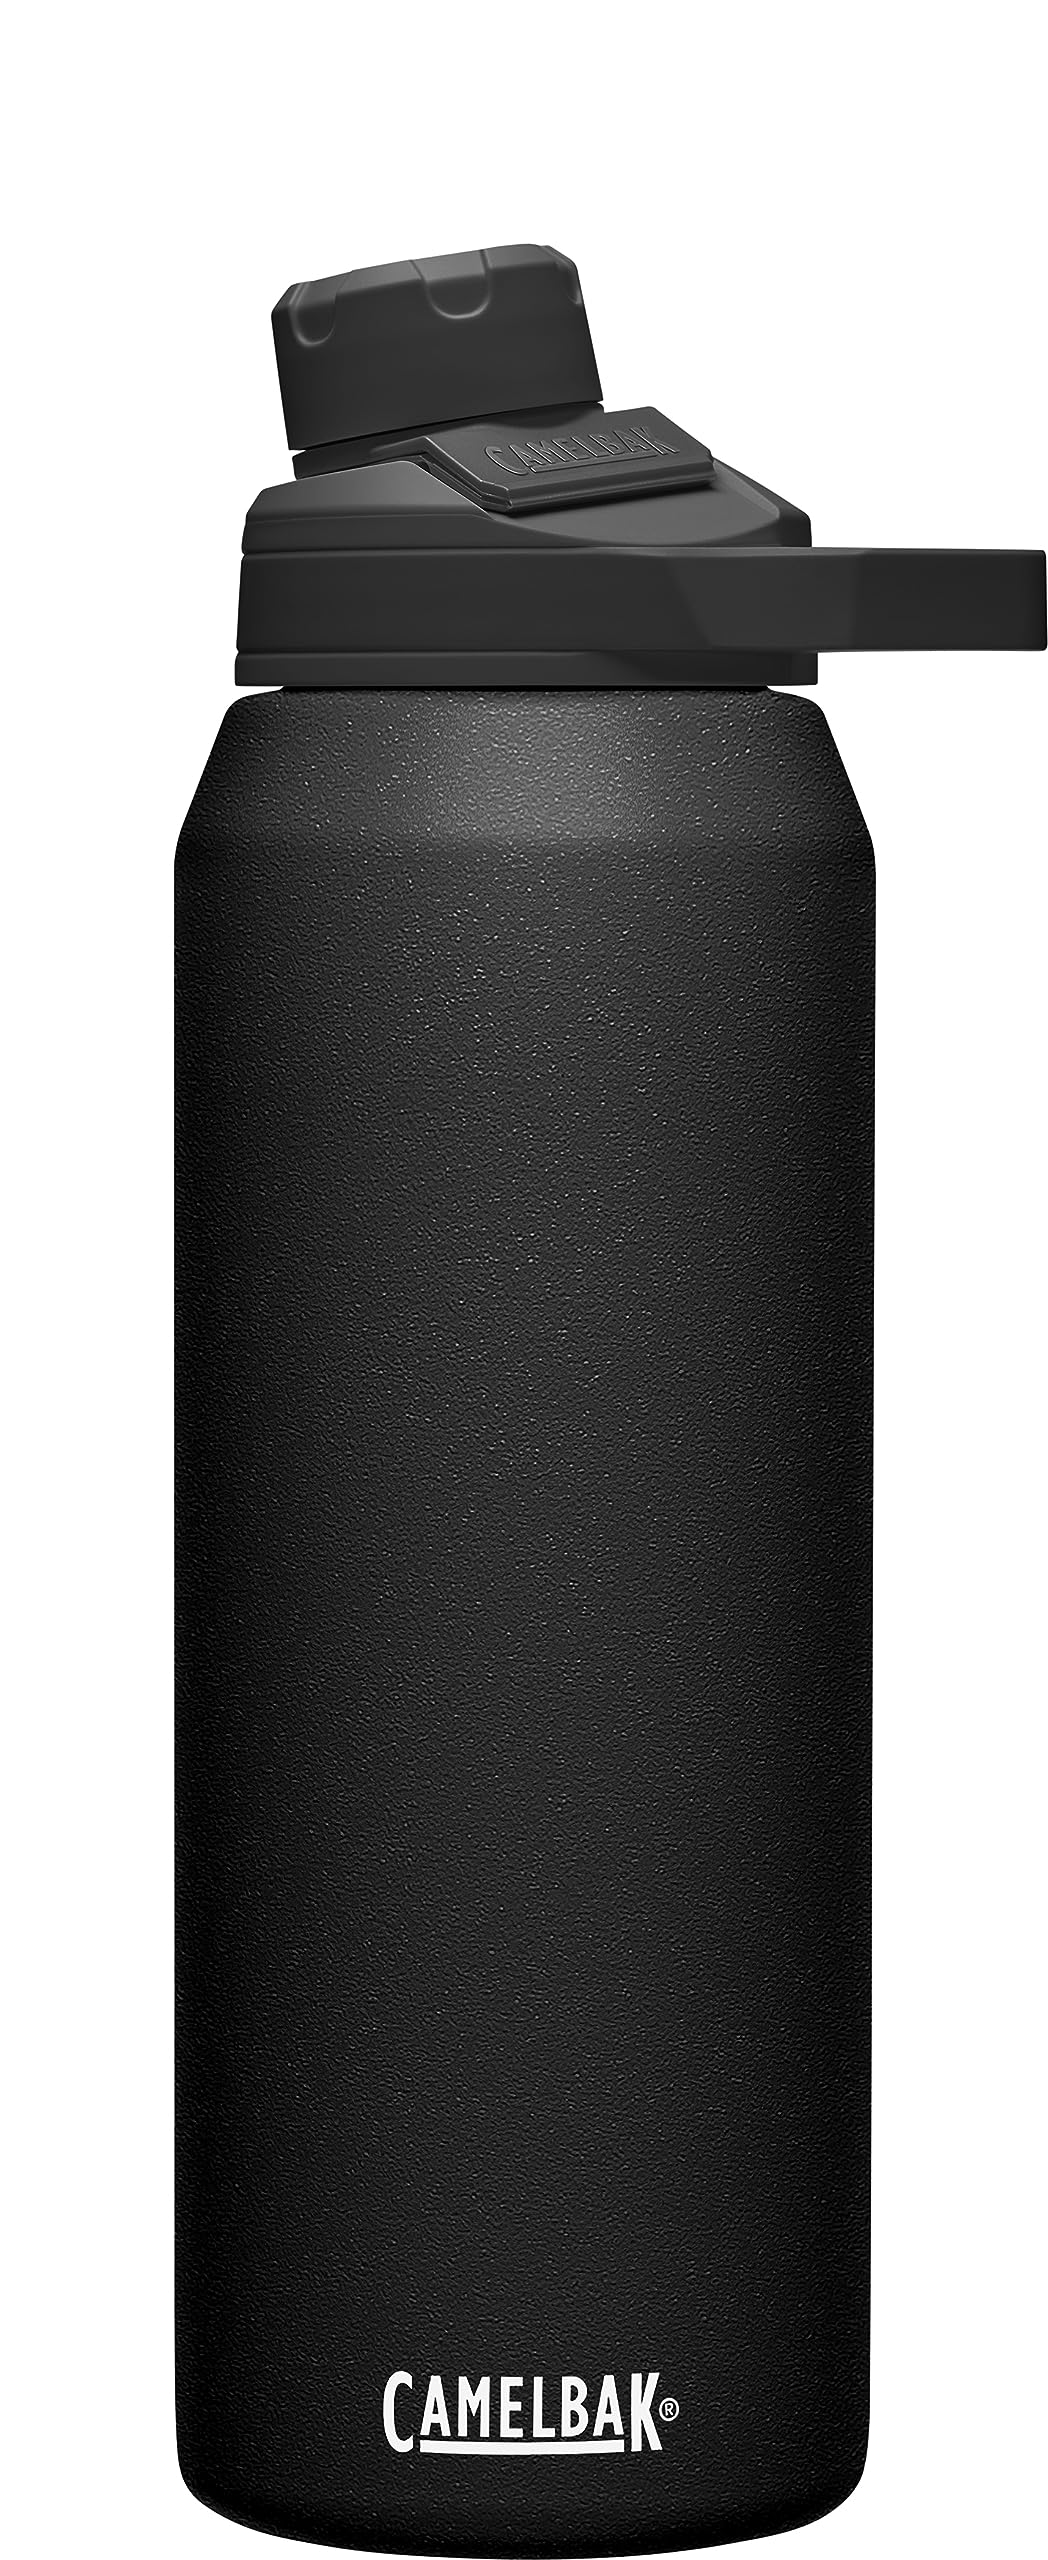 32oz CamelBak Chute Mag Vacuum Insulated Stainless Steel Water Bottle, Black $16.79